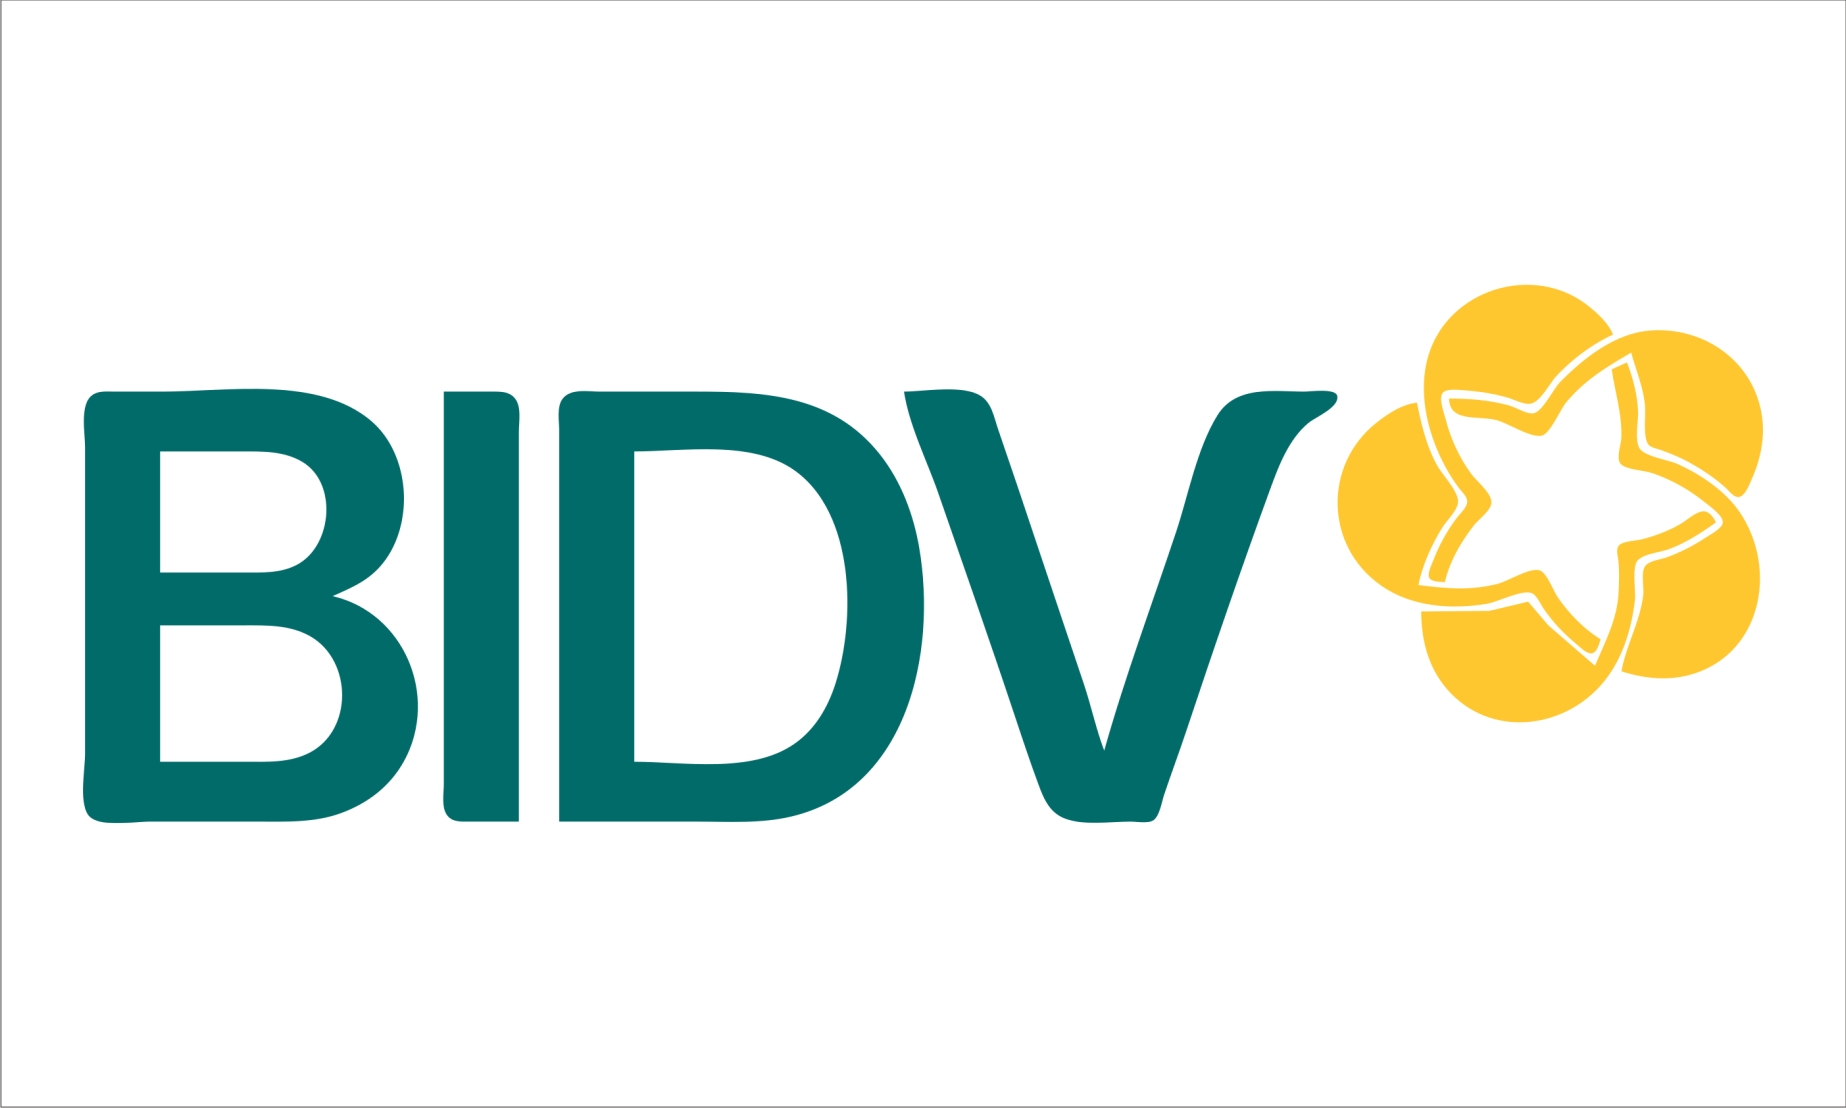 logo_bidv